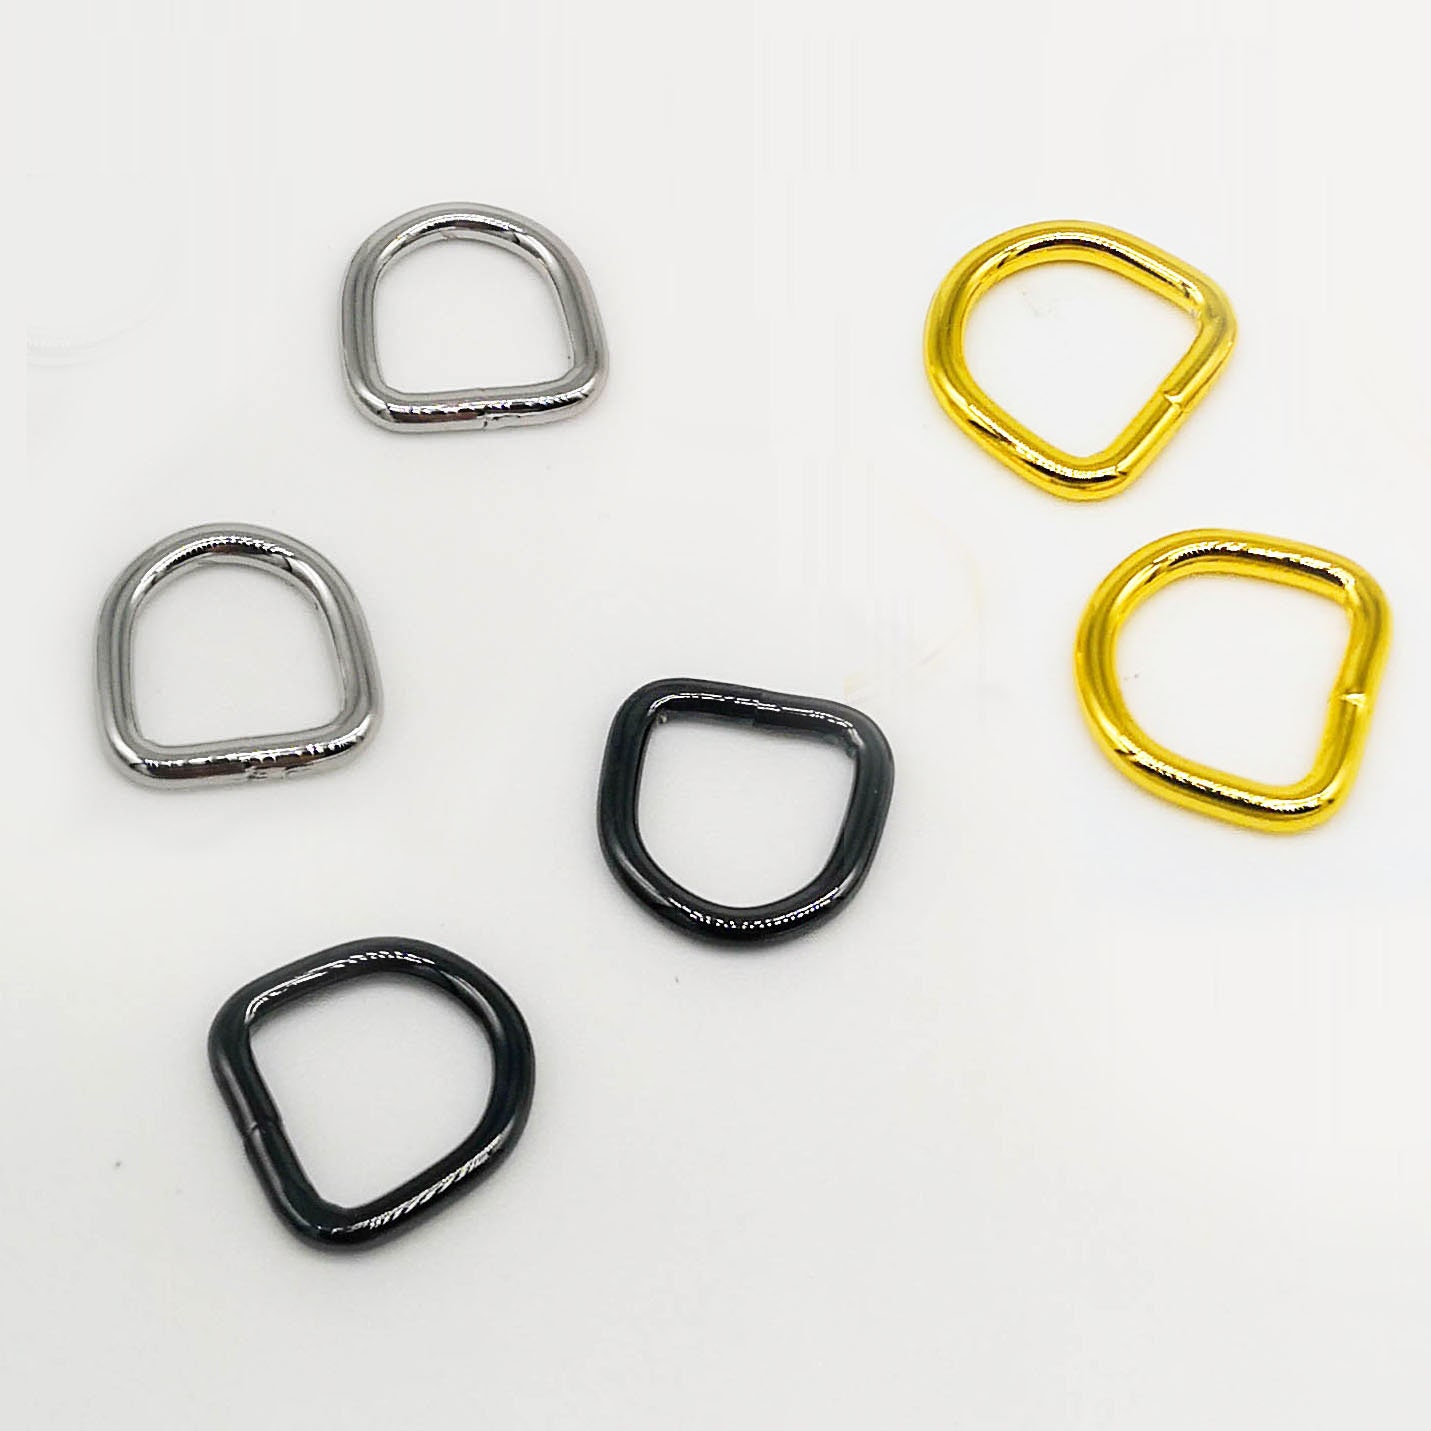 Ring Measurer, Ring Meter, Reusable Ring Meter, Adjustable Plastic